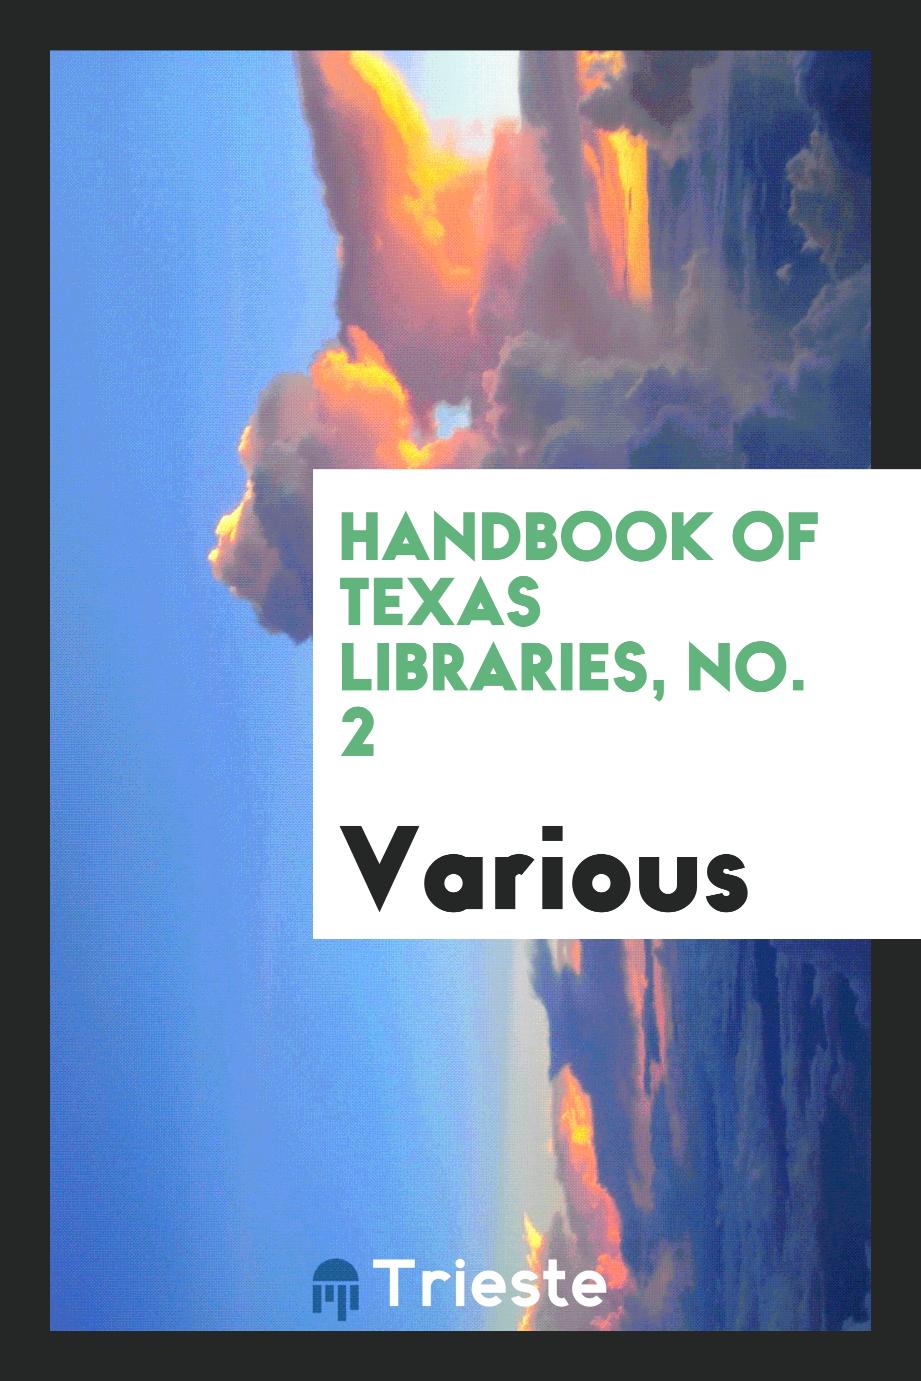 Handbook of Texas libraries, no. 2